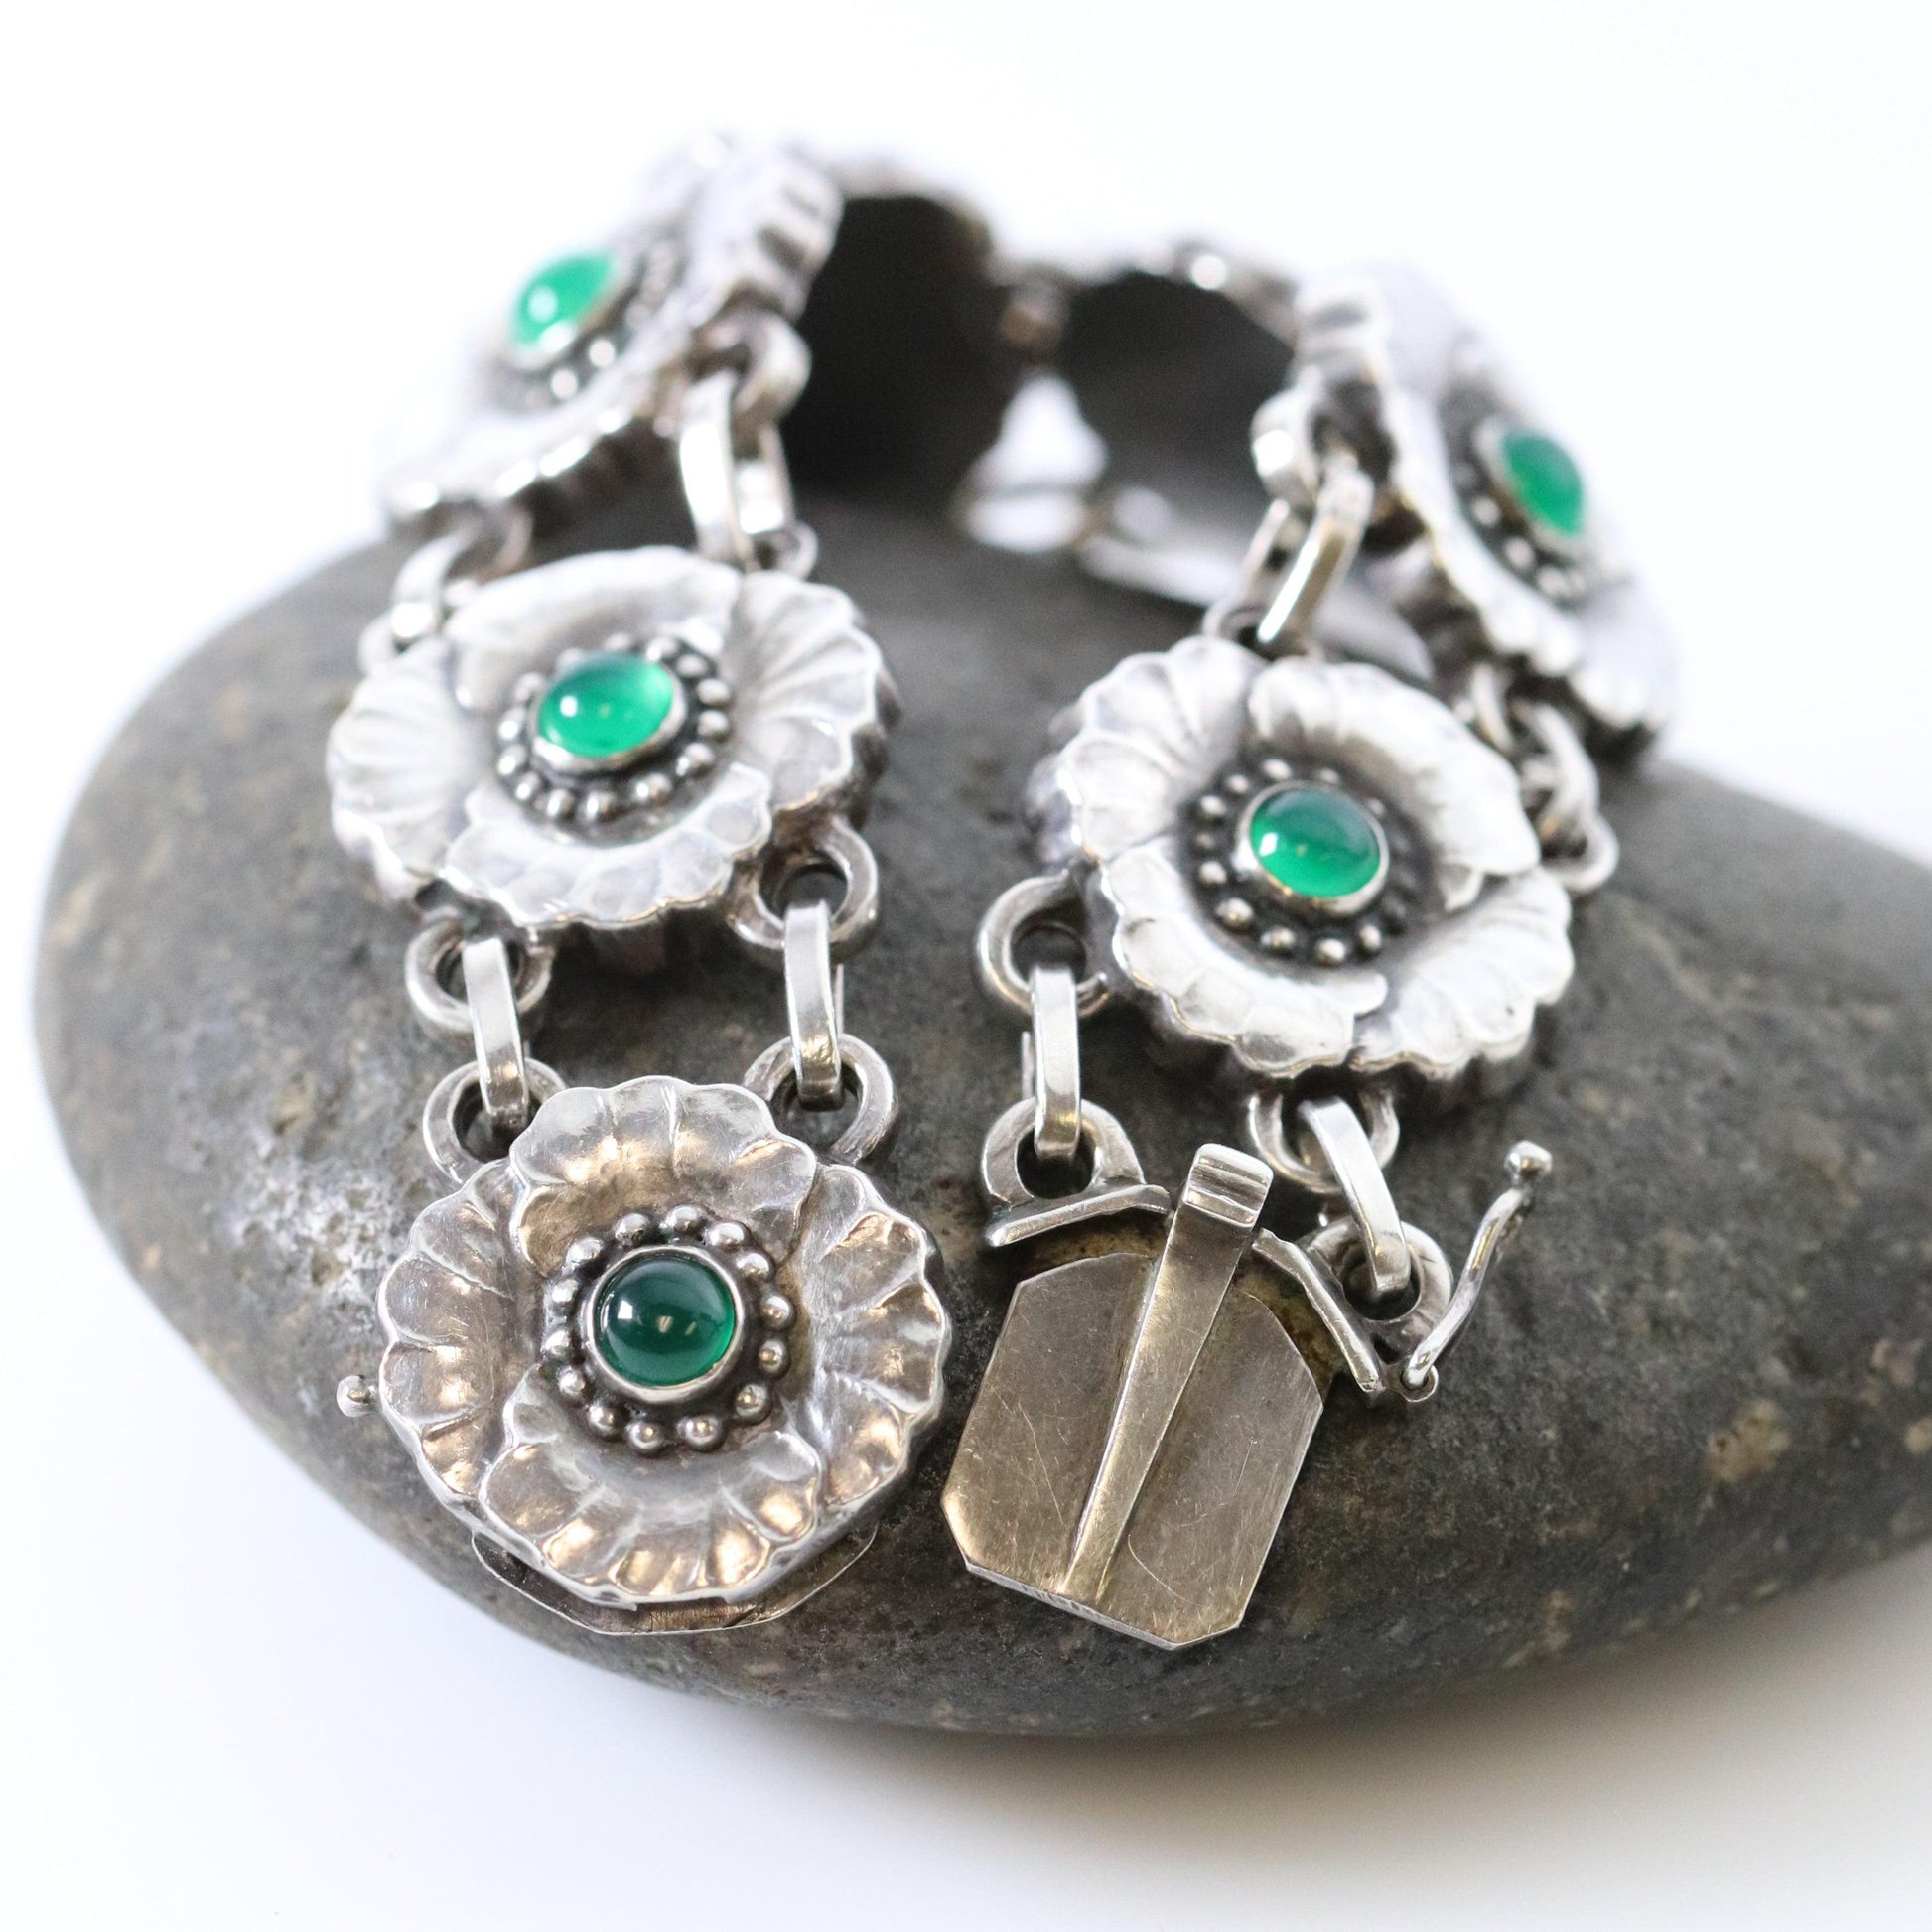 Vintage Georg Jensen Jewelry | Rare Art Nouveau Chrysoprase Floral Bracelet 36 - Carmel Fine Silver Jewelry